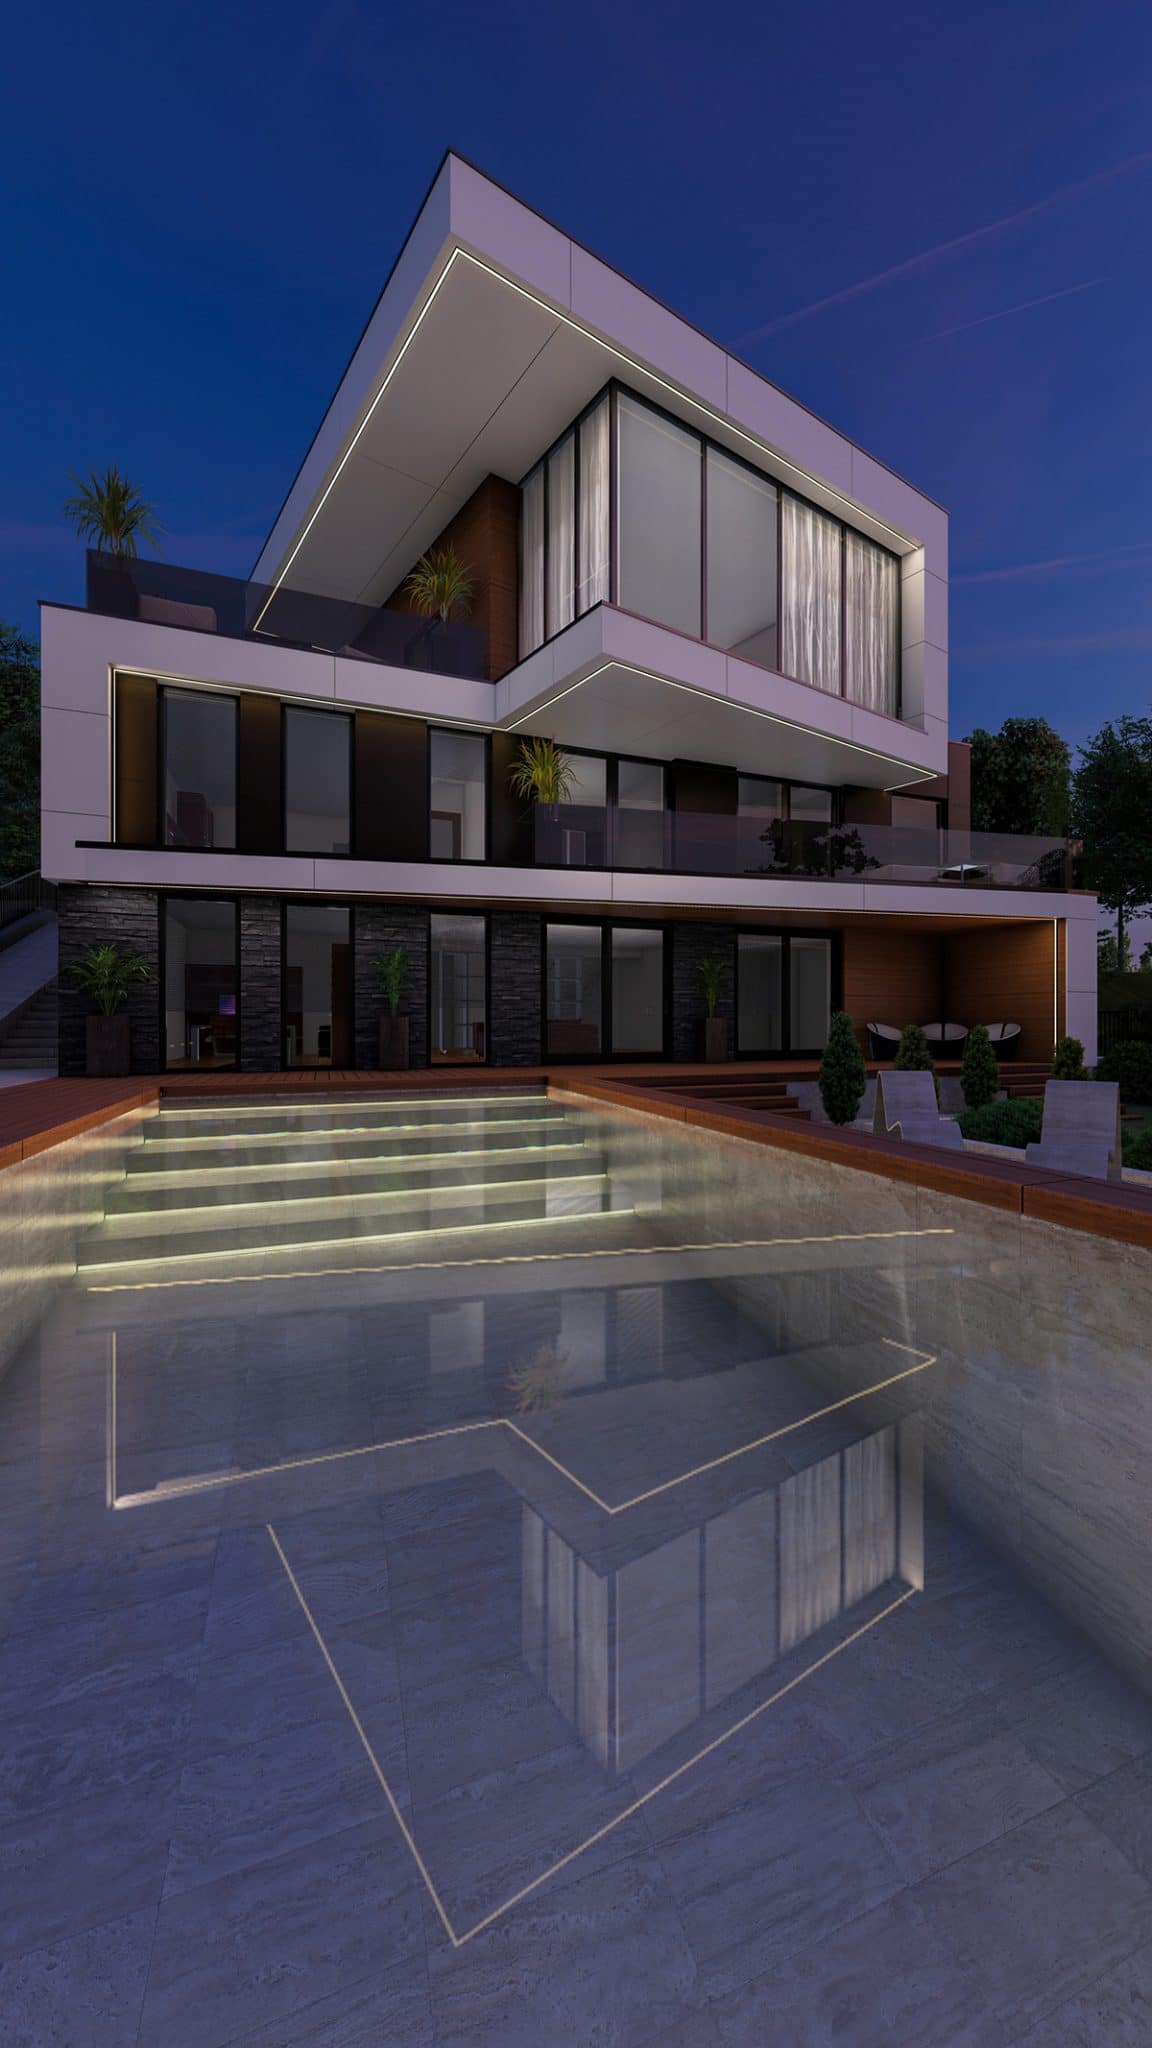 Proiect arhitectural stilului modern in designul casei contemporane cu bazin la aer liber